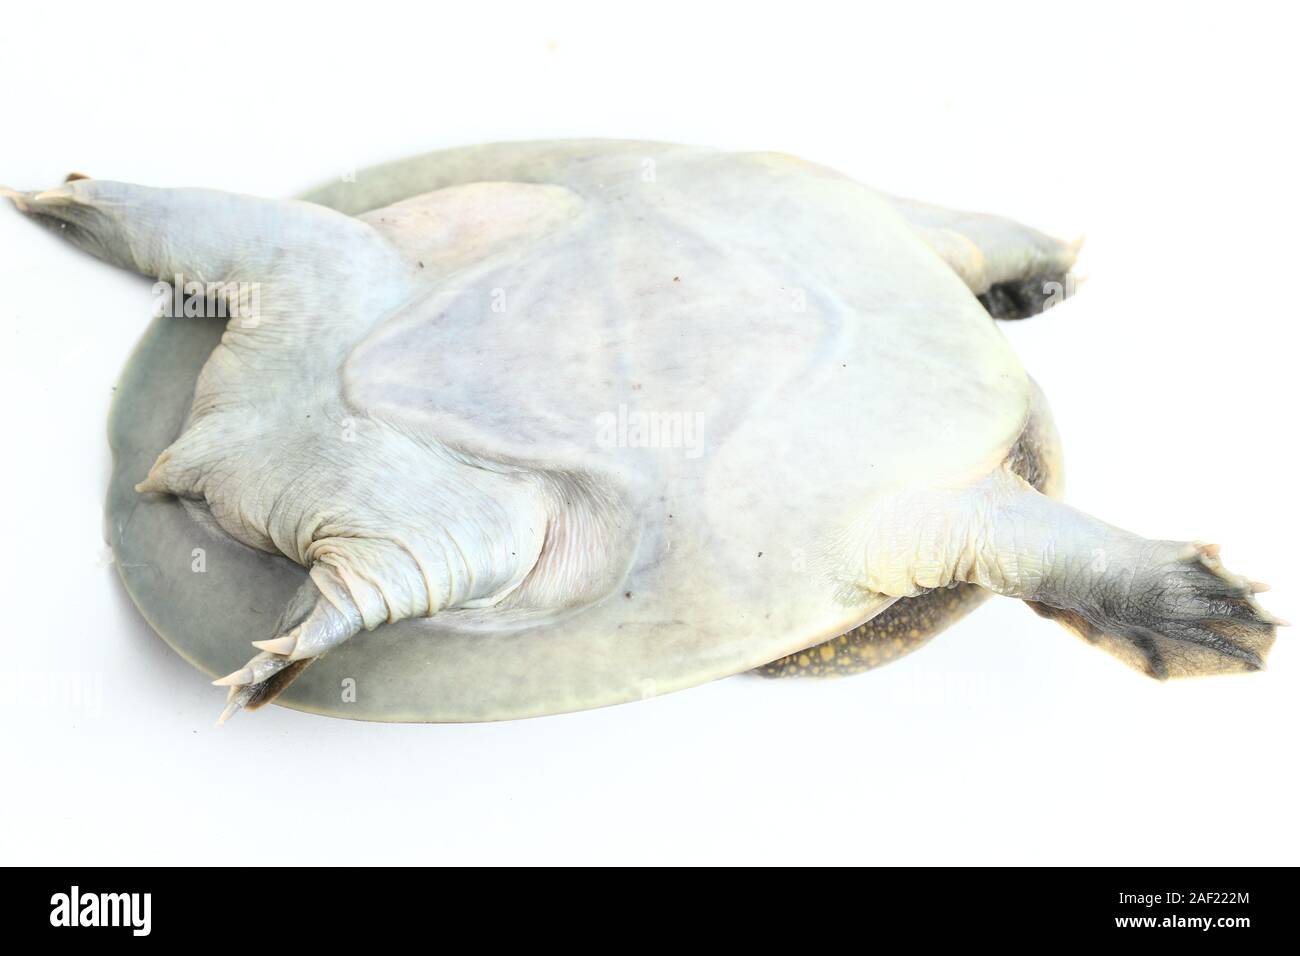 Common softshell turtle or asiatic softshell turtle (Amyda cartilaginea) isolated on white background Stock Photo